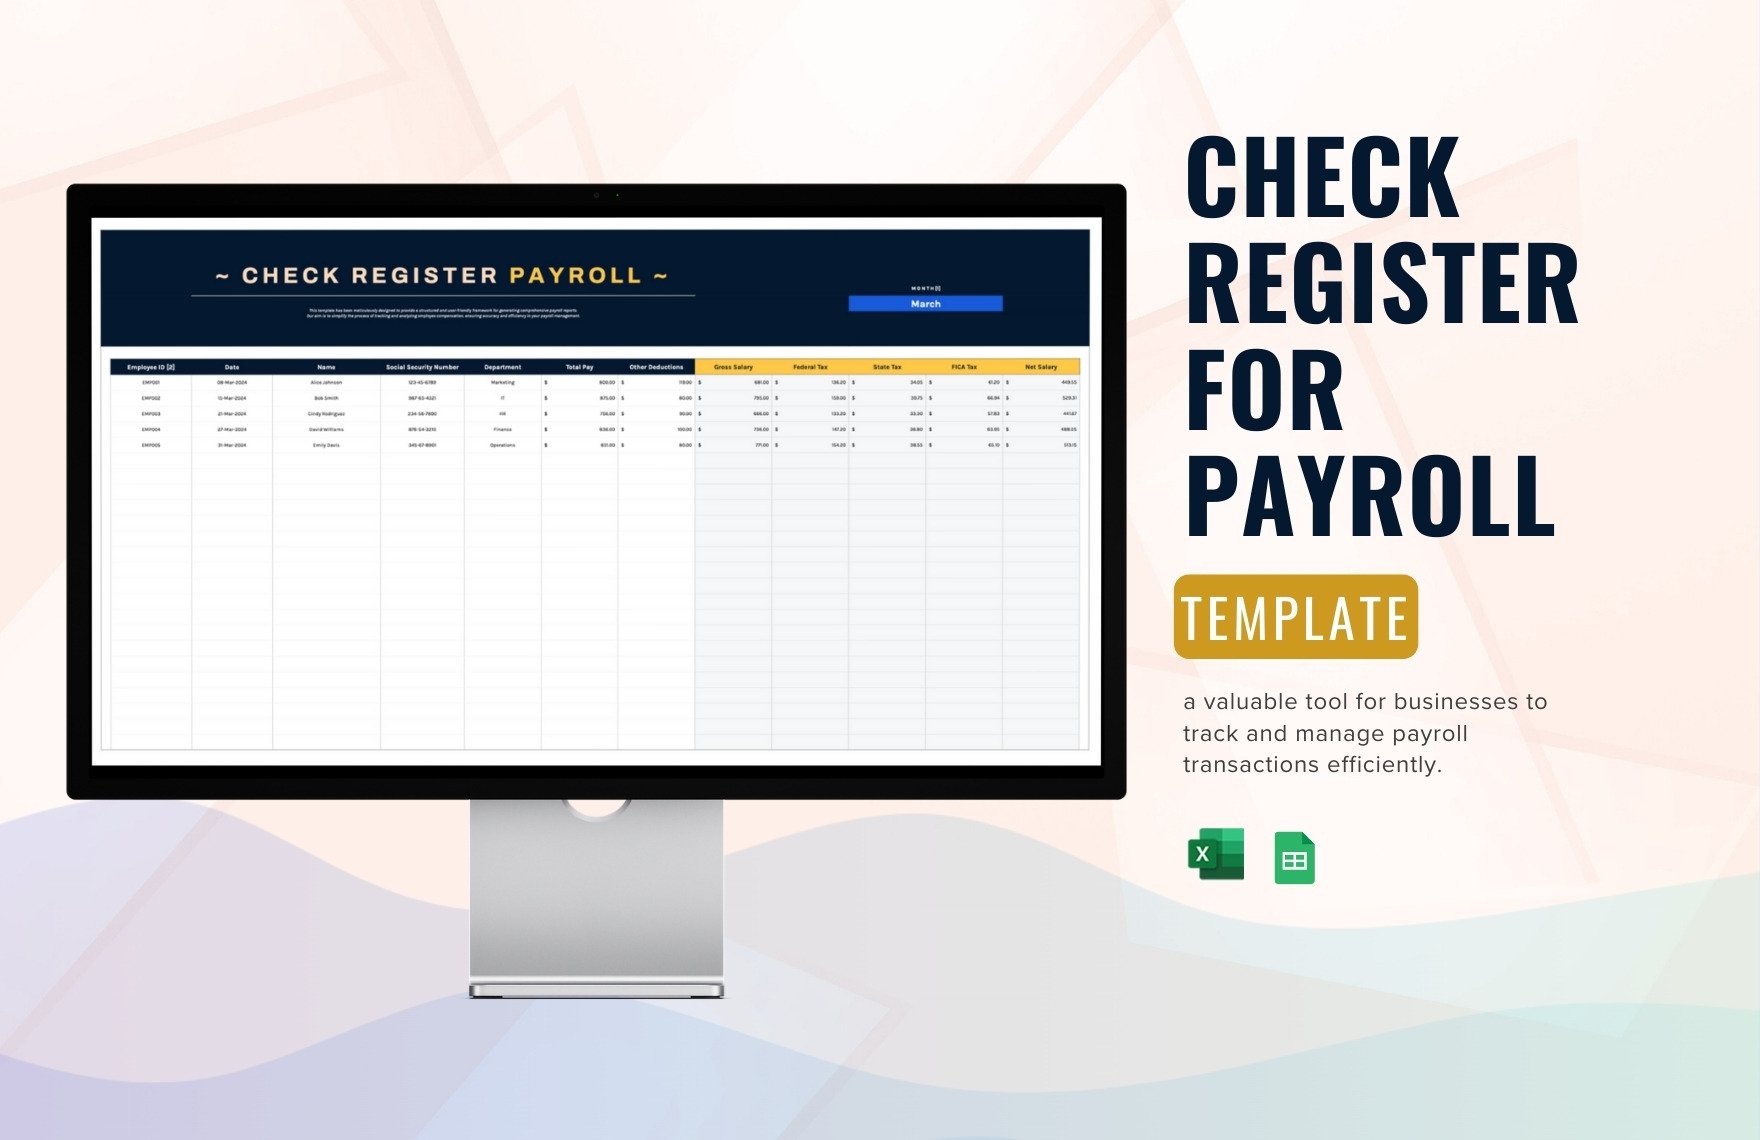 Check Register for Payroll Template